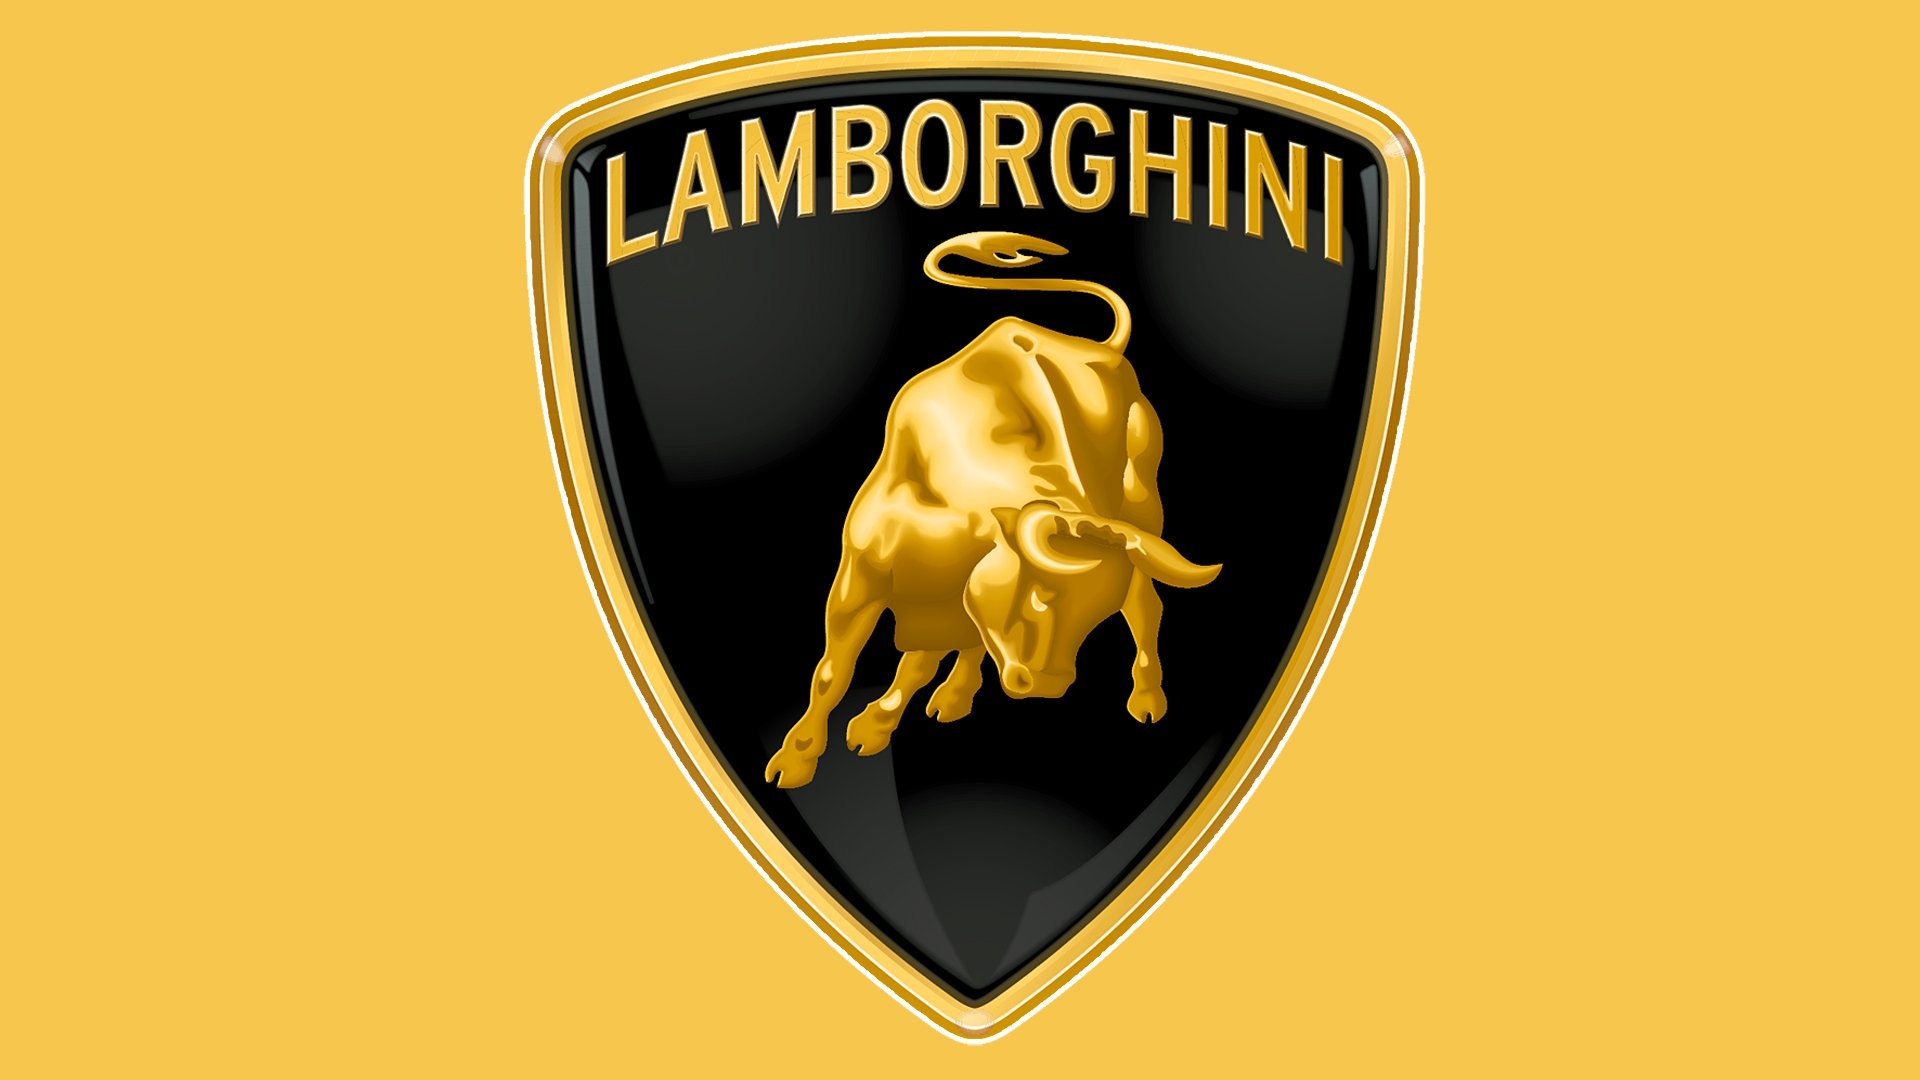 Lamborghini logo, Symbol meaning, History, Brand, 1920x1080 Full HD Desktop